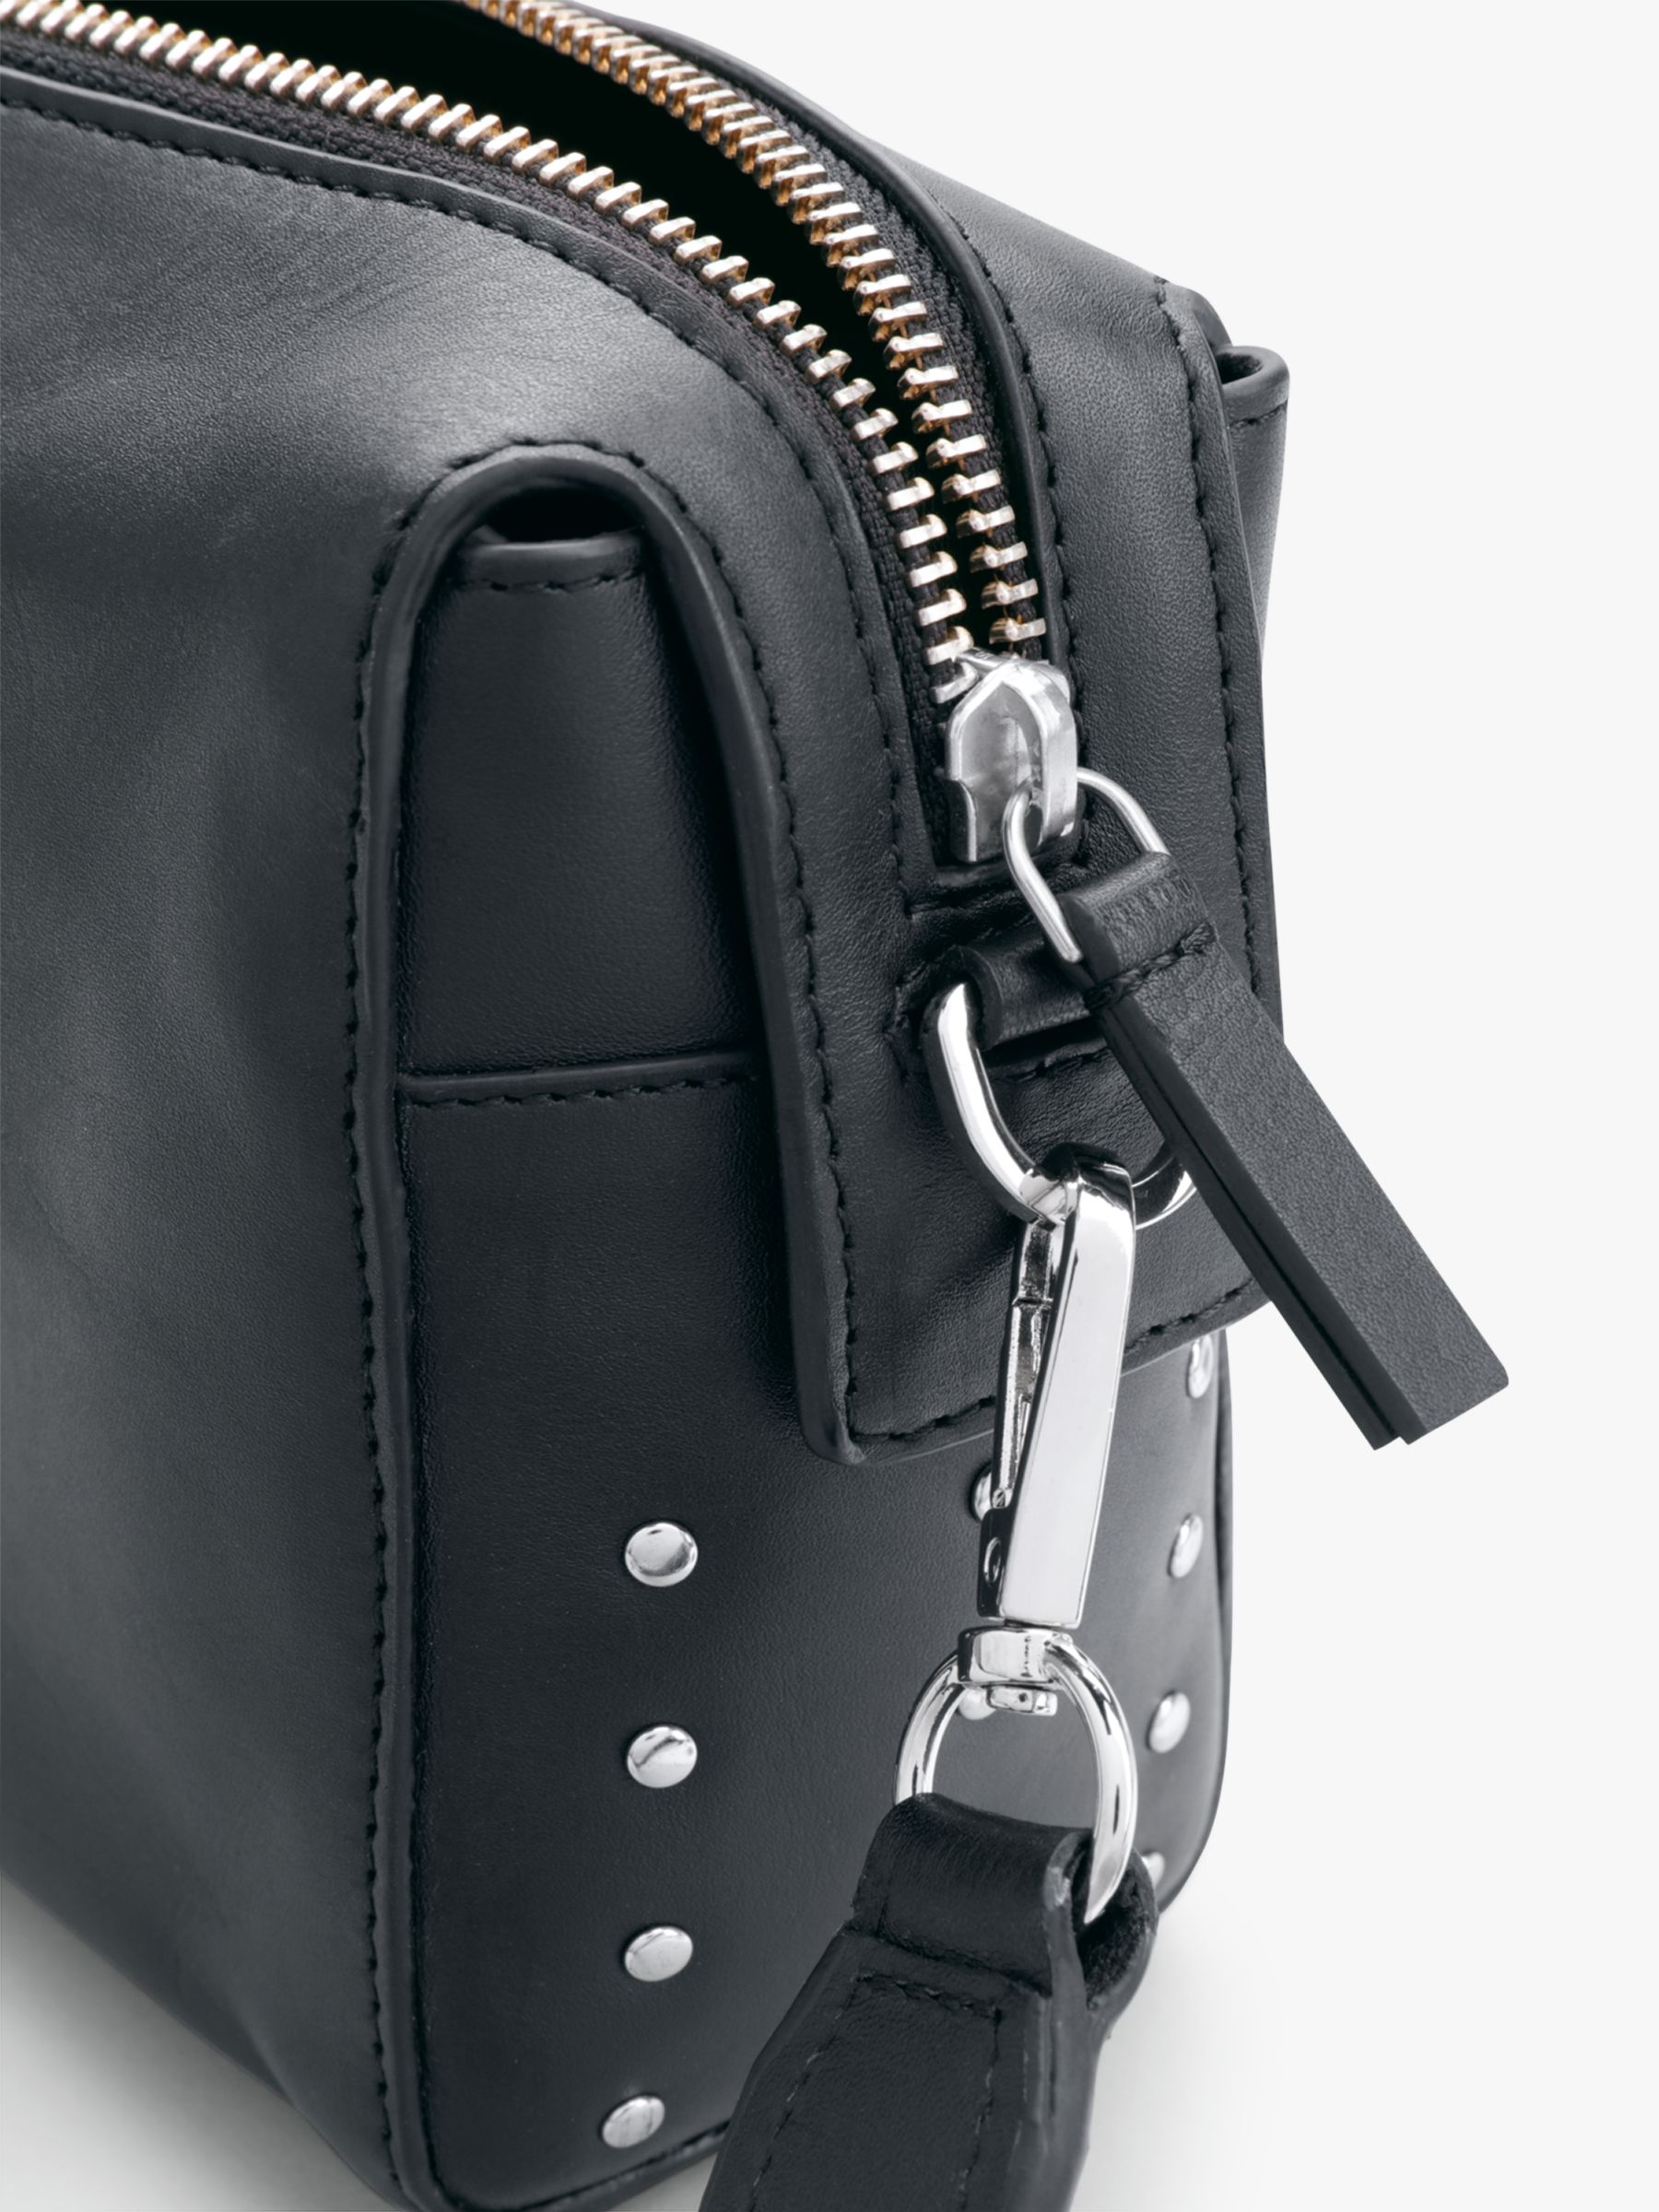 hush Apollo Leather Cross Body Bag, Black/Silver at John Lewis & Partners